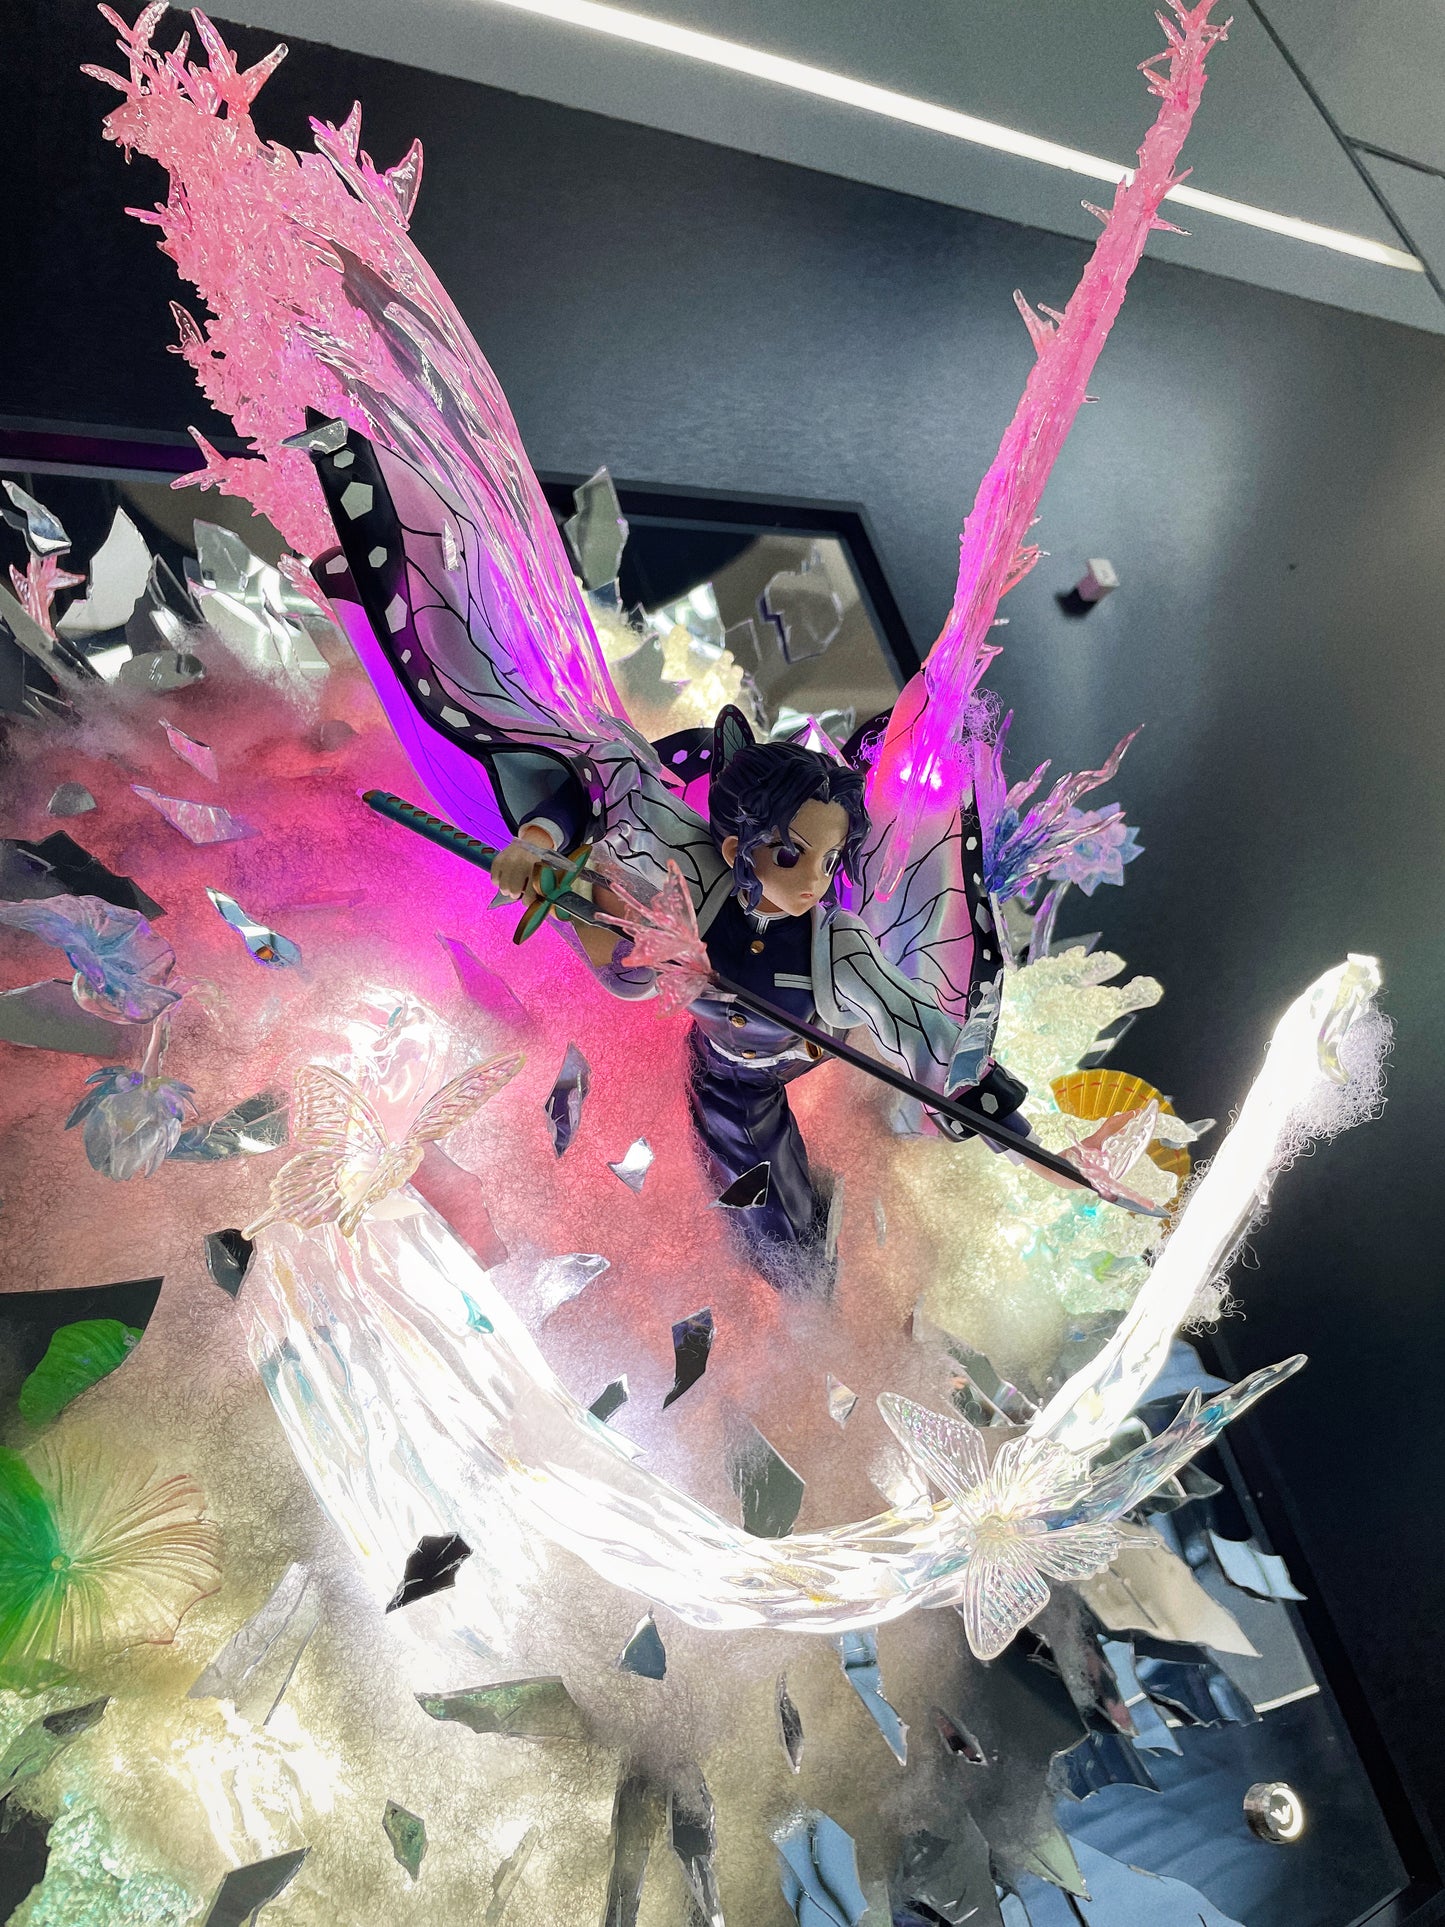 Demon slayer Shinobu kocho fly from broken mirror 50*60cm